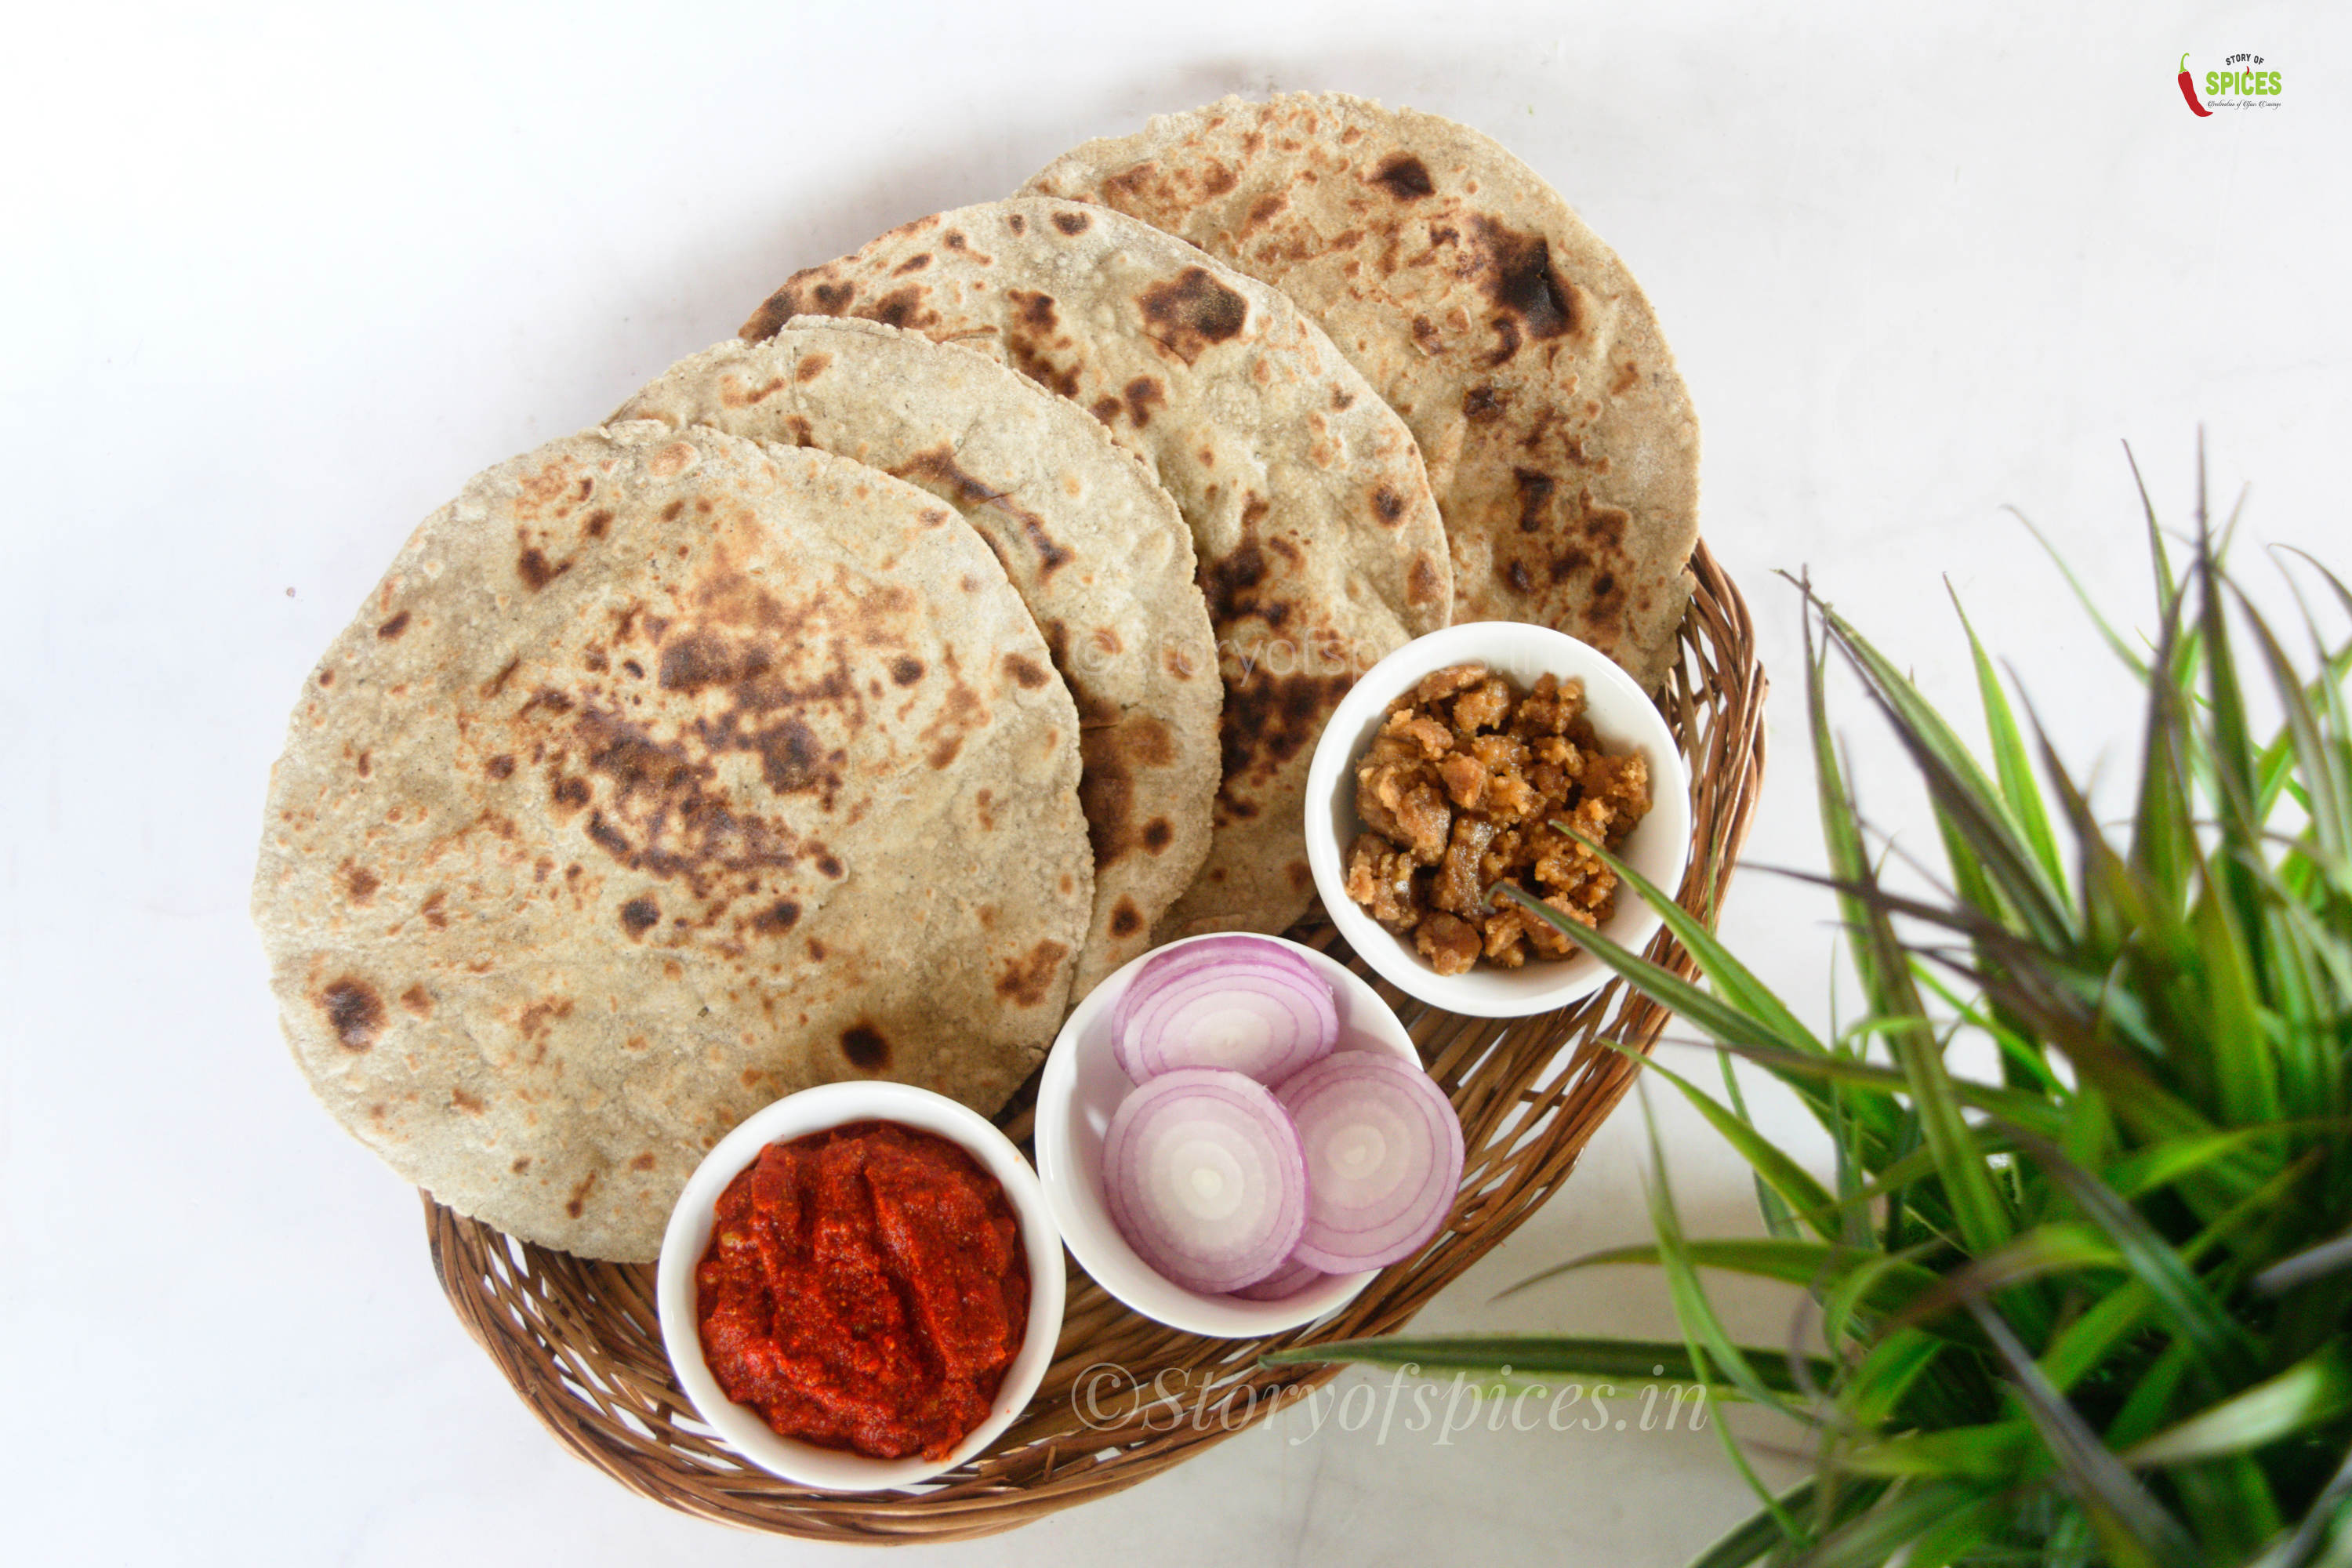 bajre-ki-roti-story-of-spices ,